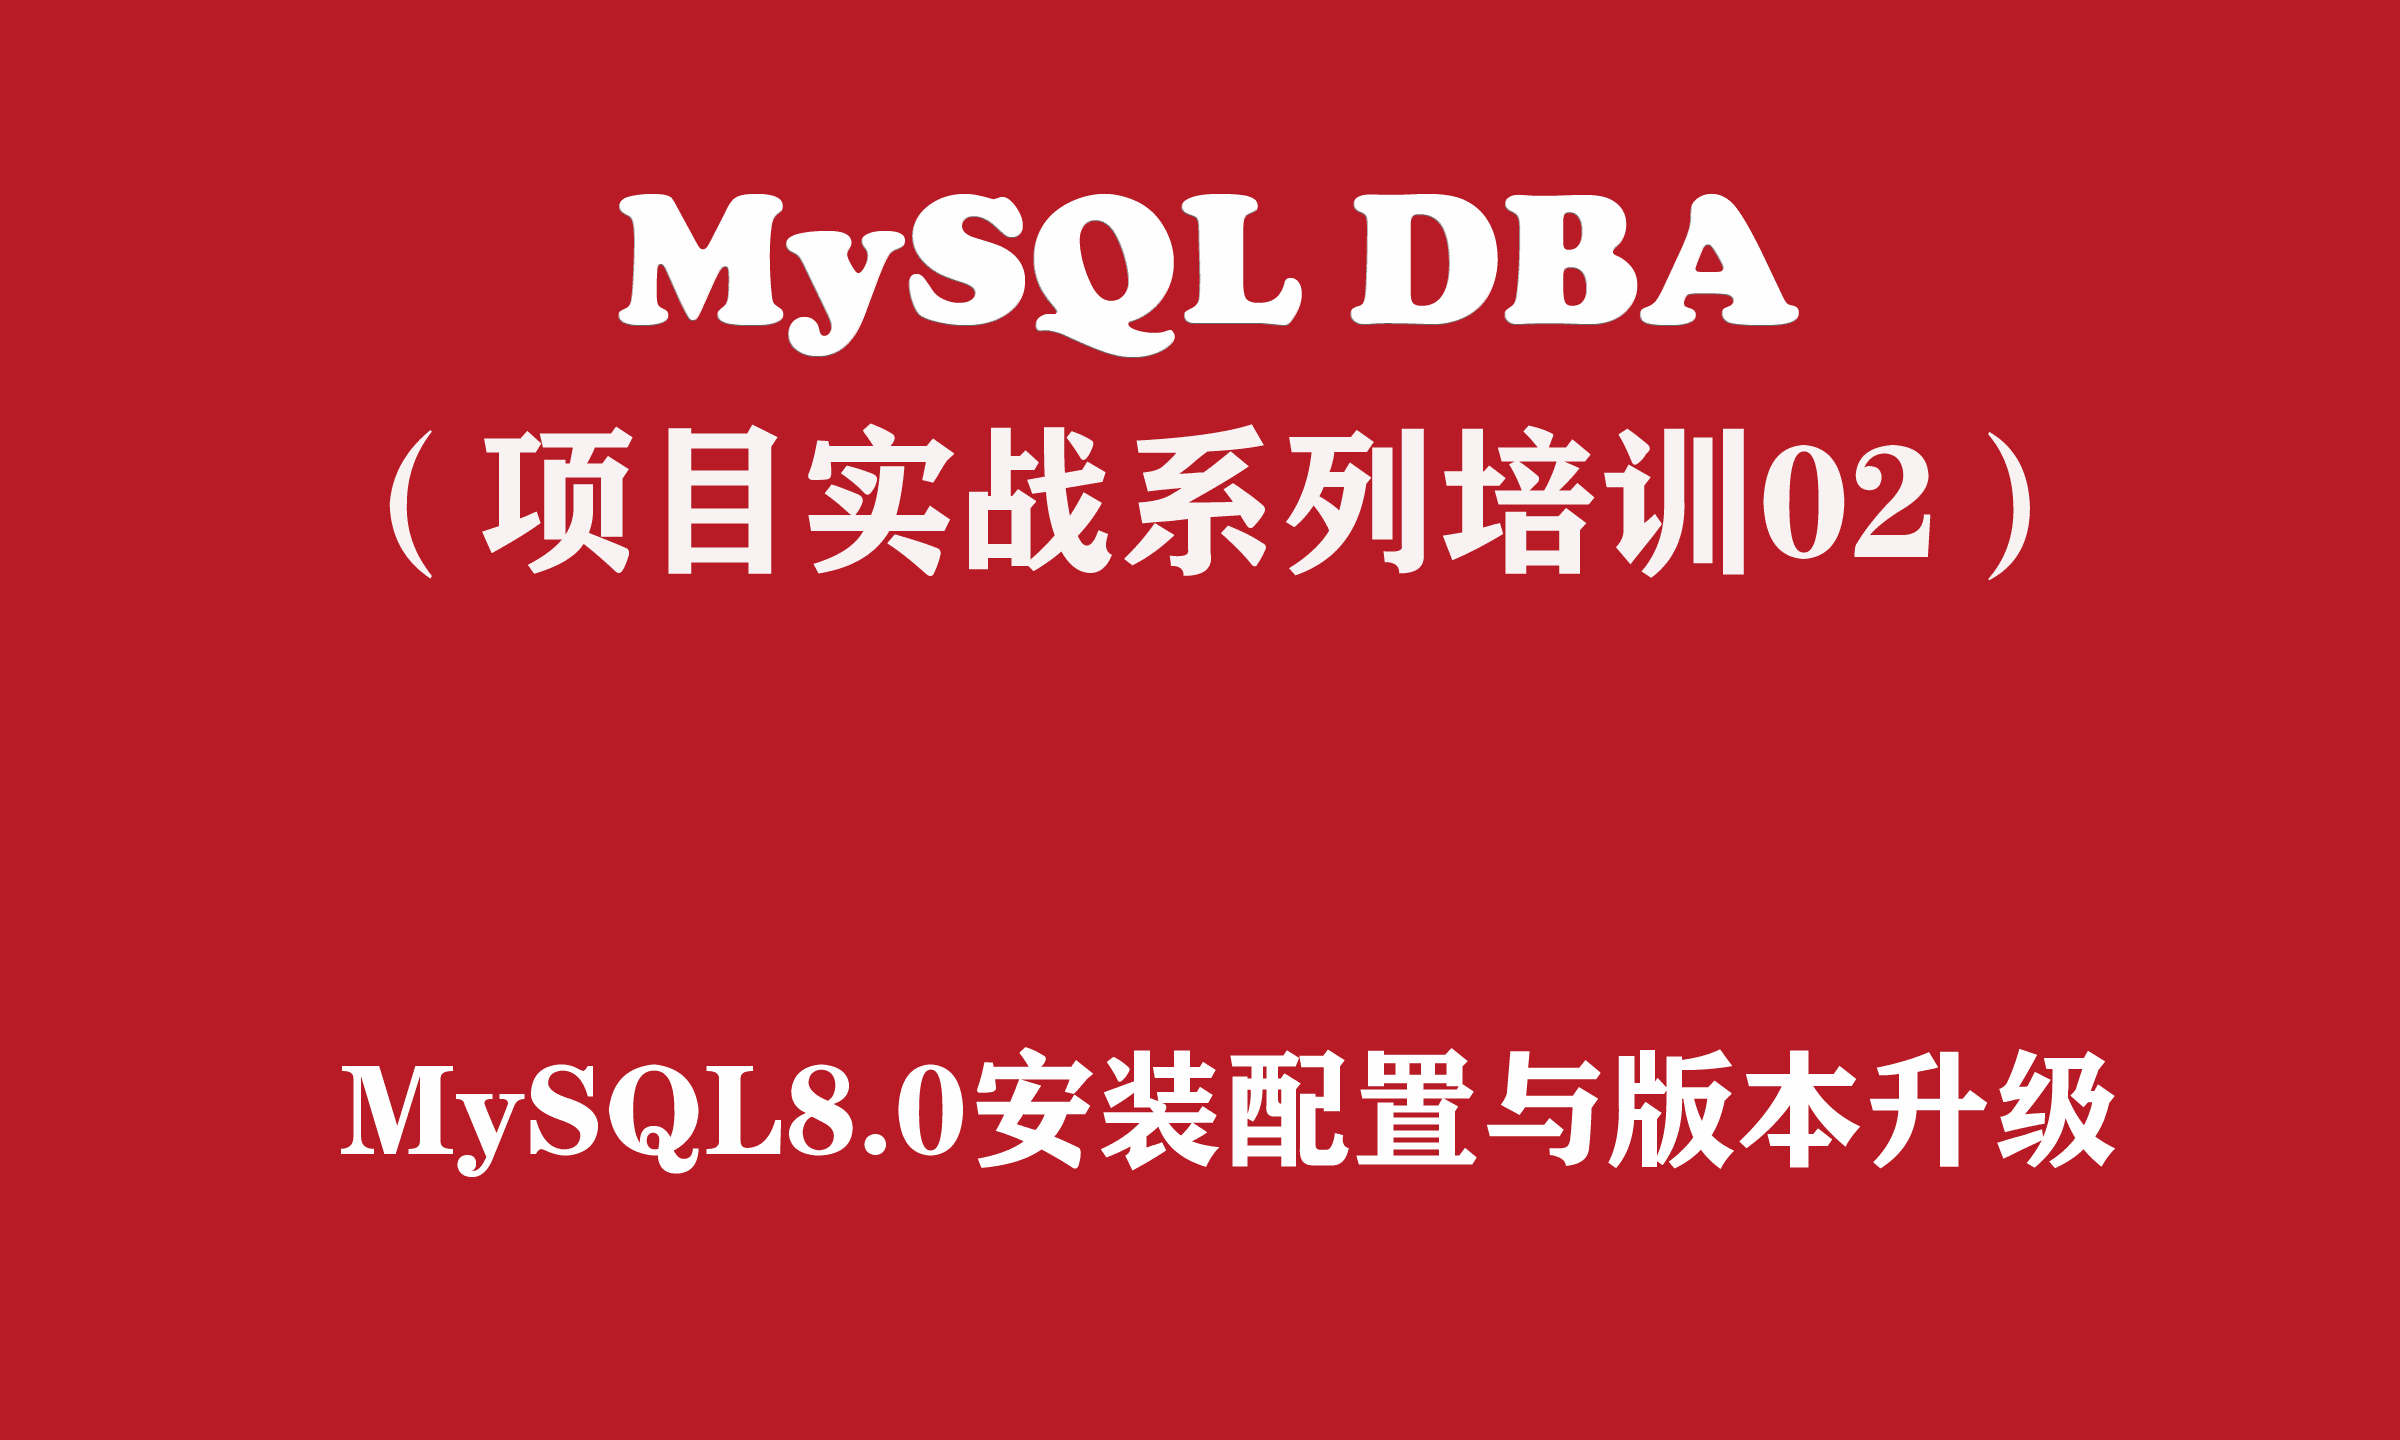  MySQL 8.0 installation configuration and version upgrade [MySQL DBA practical training series 02]